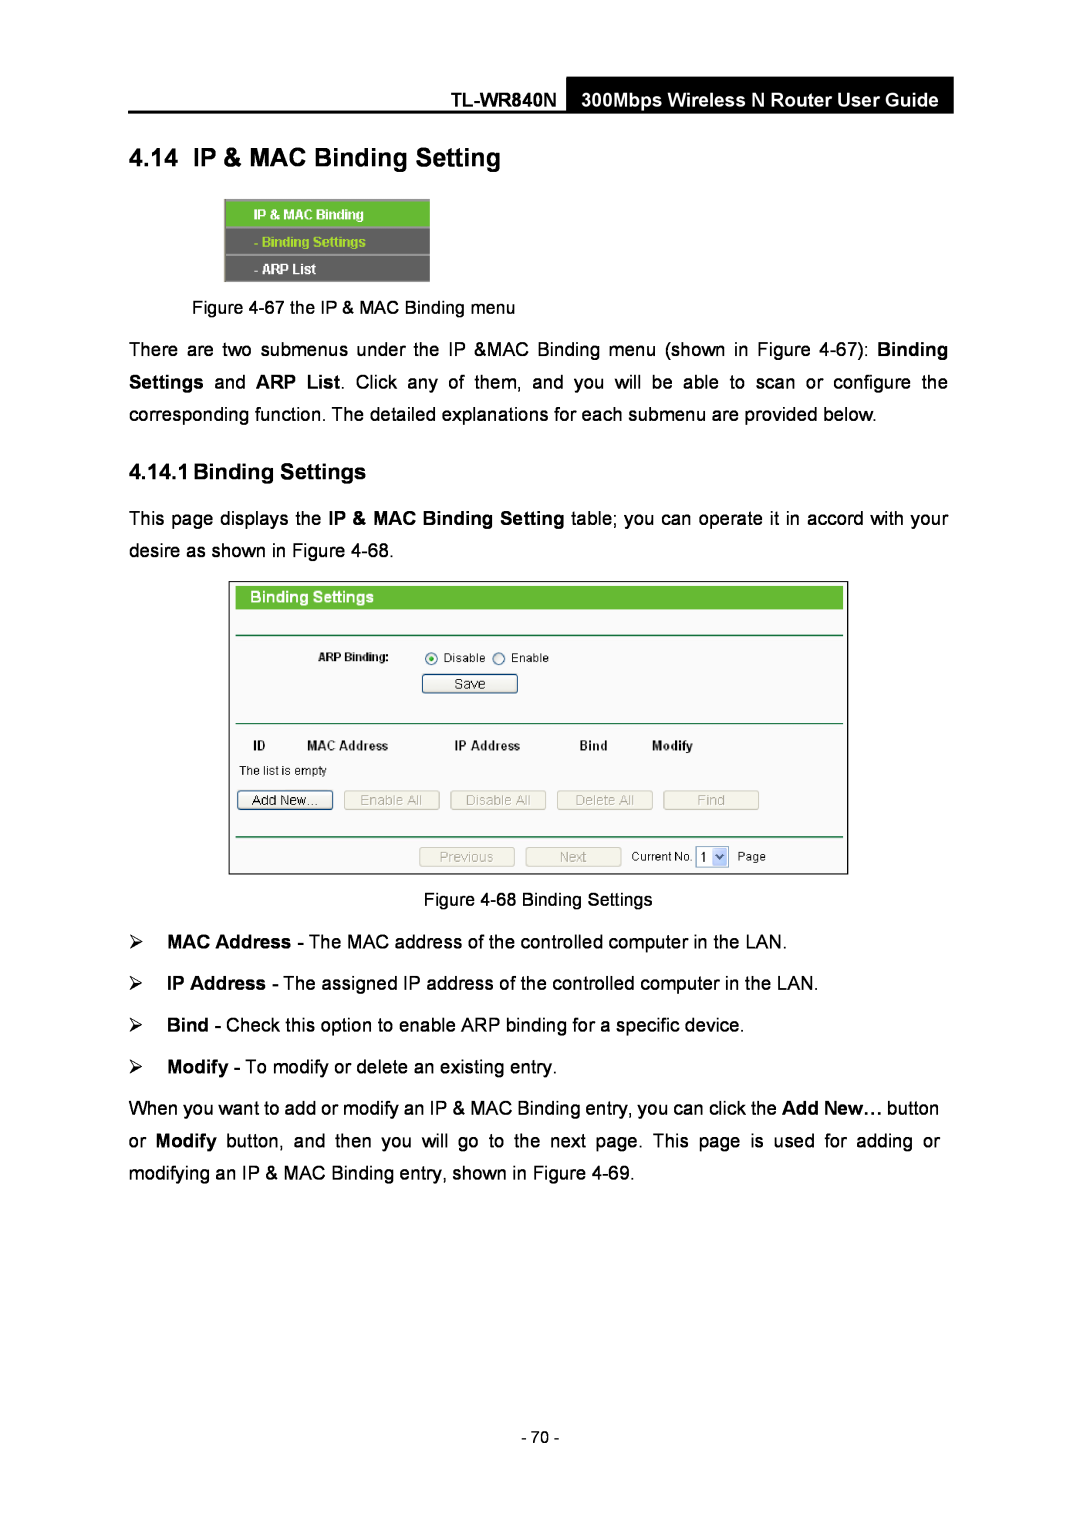 TP-Link manual 4.14 IP & MAC Binding Setting, Binding Settings, TL-WR840N 300Mbps Wireless N Router User Guide 